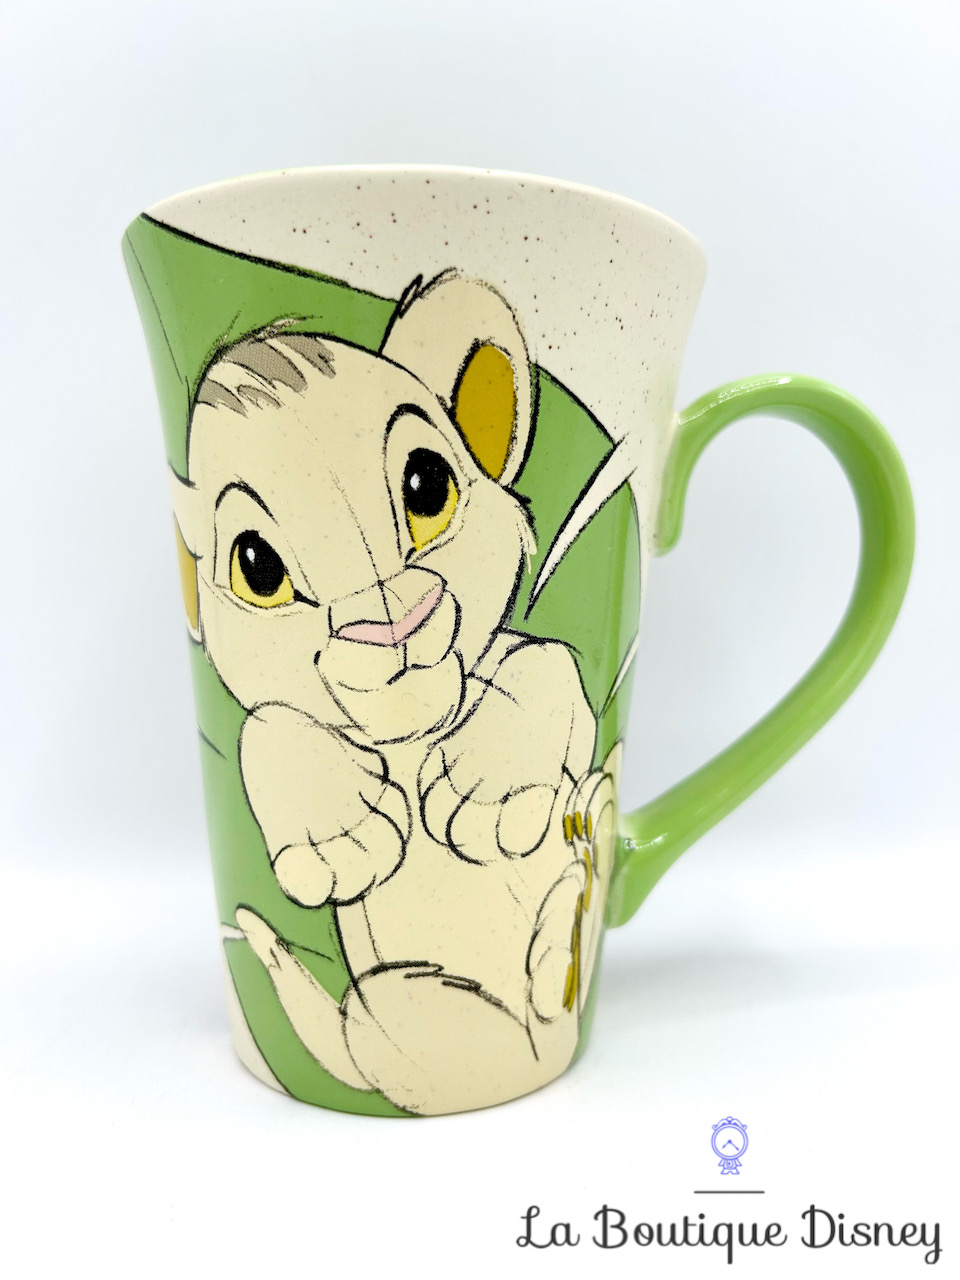 Tasse Simba Rafiki Disney Store 2017 mug Le roi lion haut